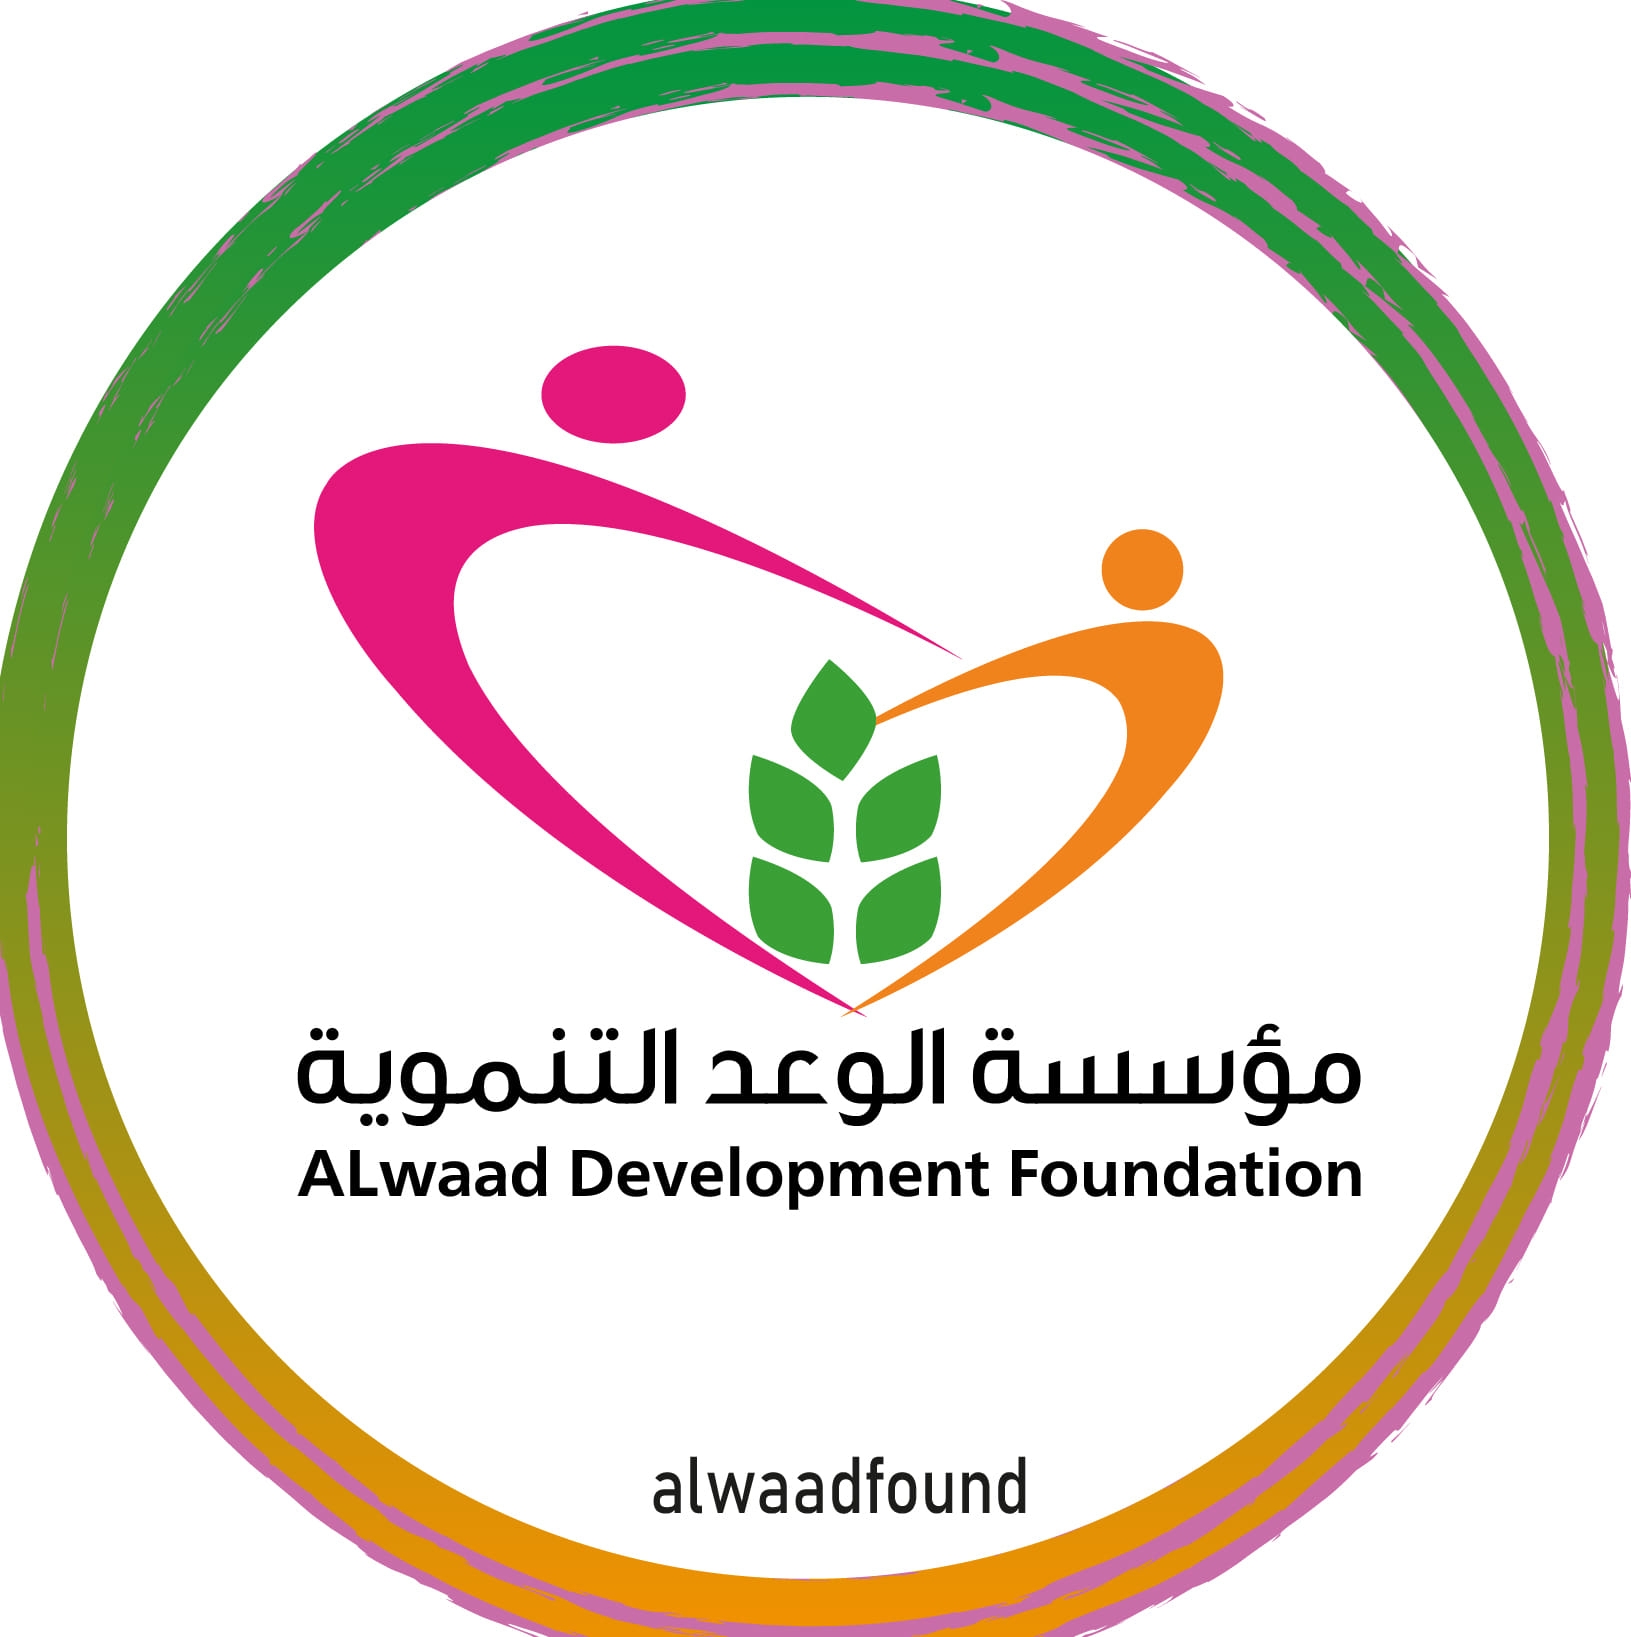 Al-Waad Development Foundation